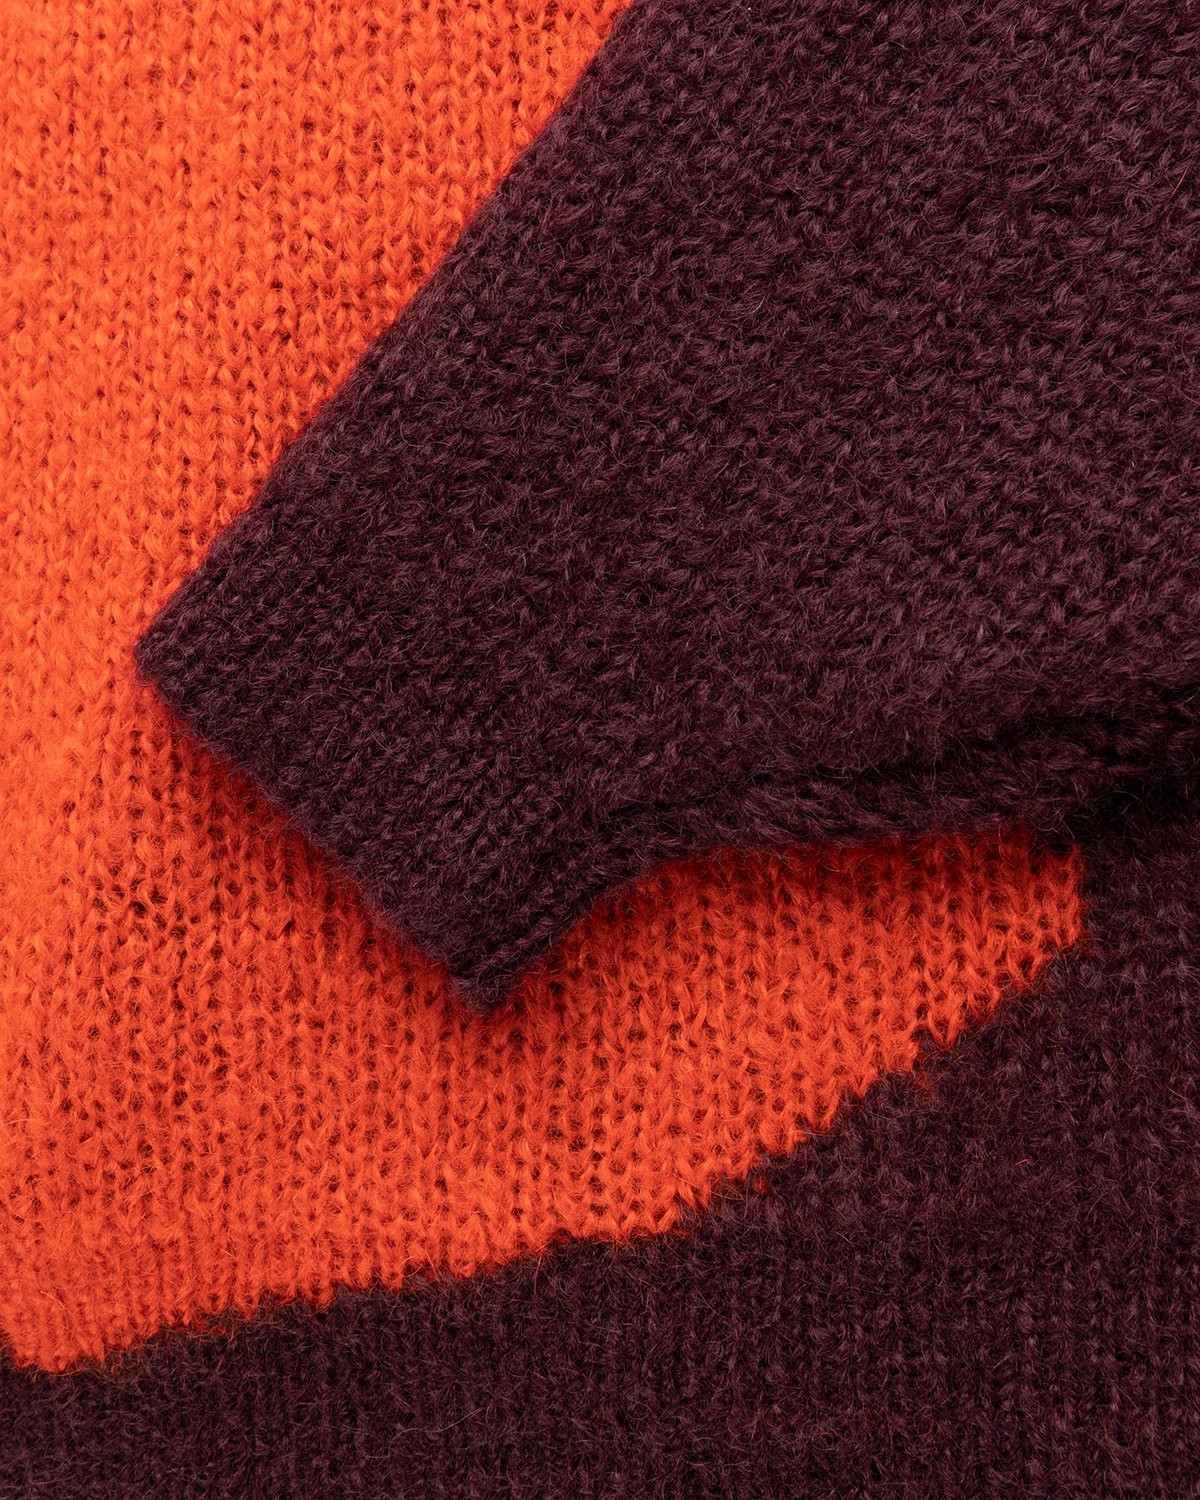 Jil Sander – Sweater Knitted Open Red - Knitwear - Red - Image 4